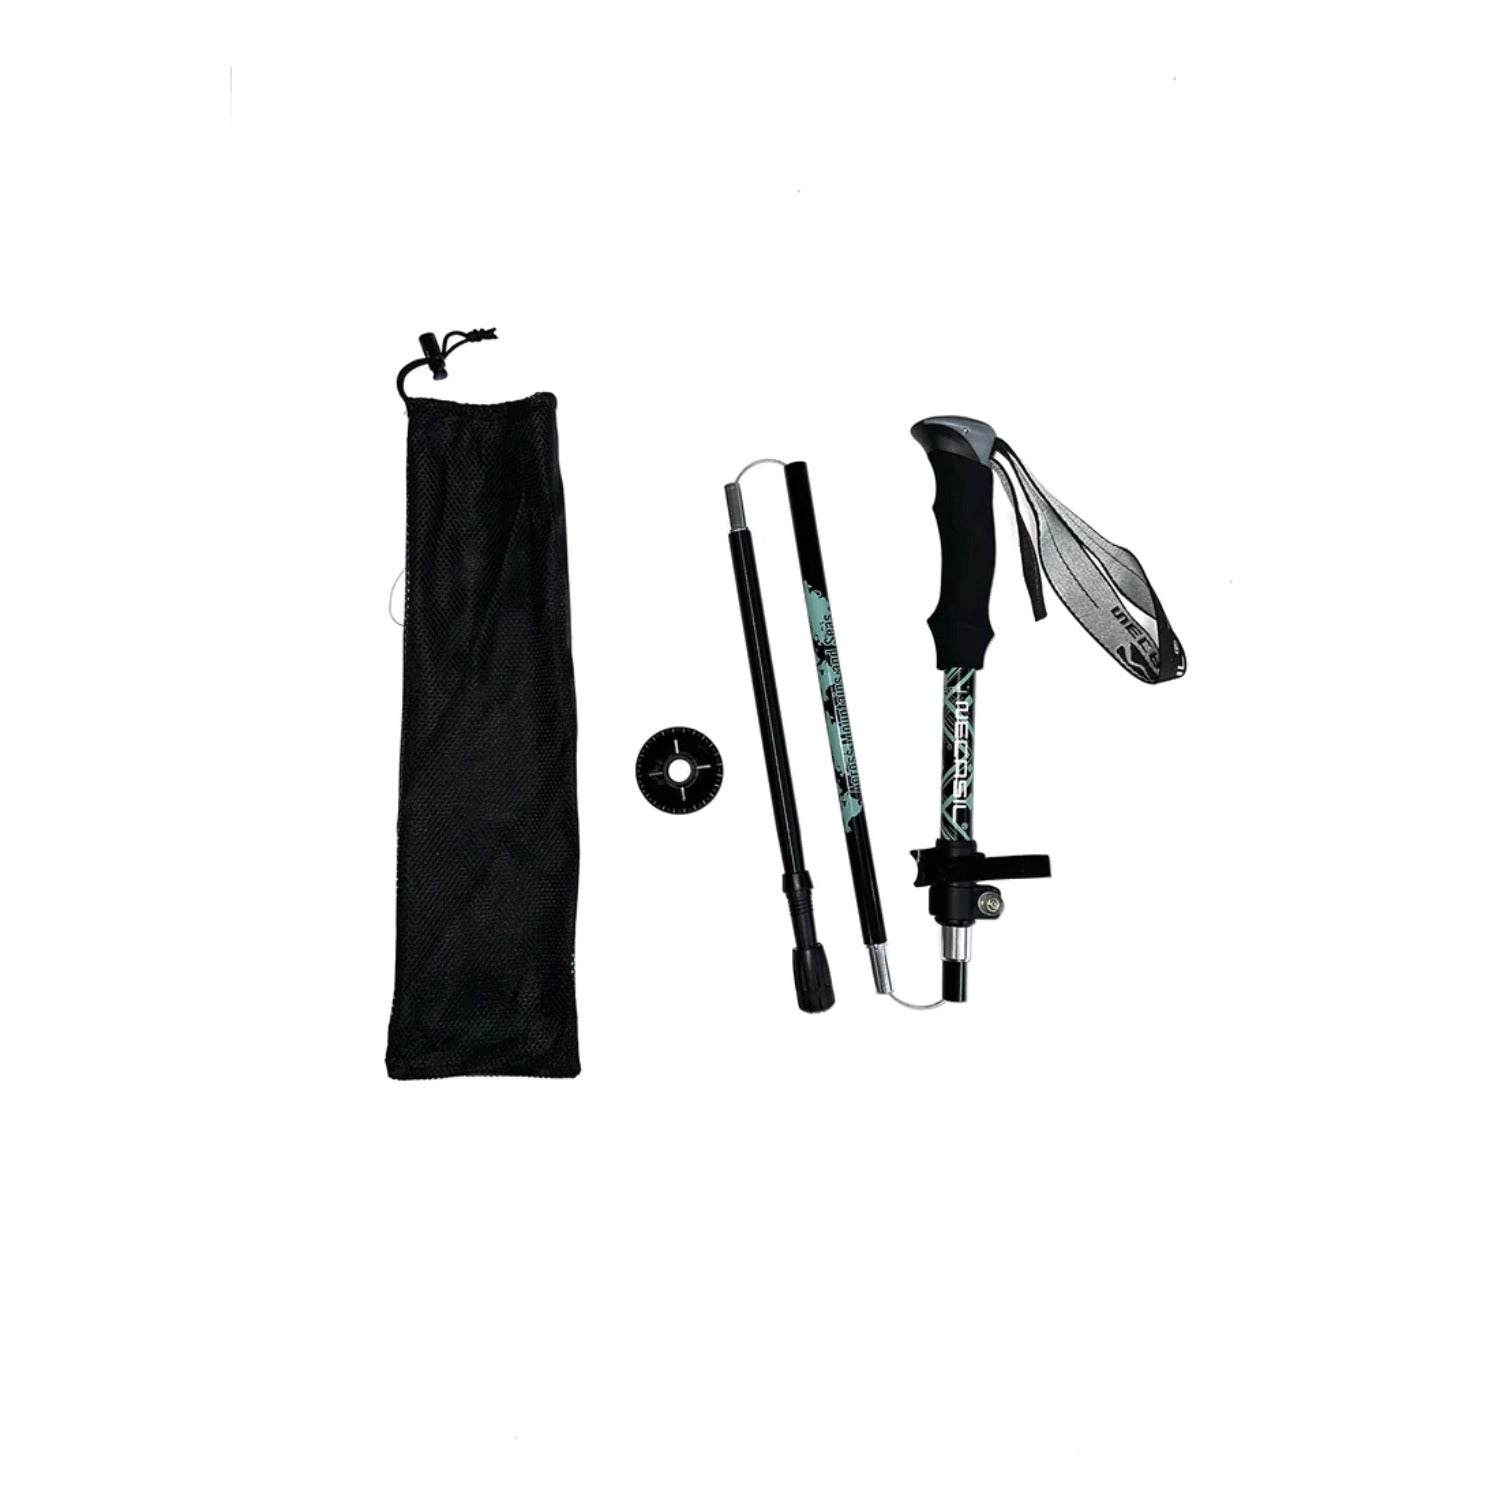 Buy Gokyo K2 Foldable Trekking Pole 33 Cms Black | Trekking Pole at Gokyo Outdoor Clothing & Gear